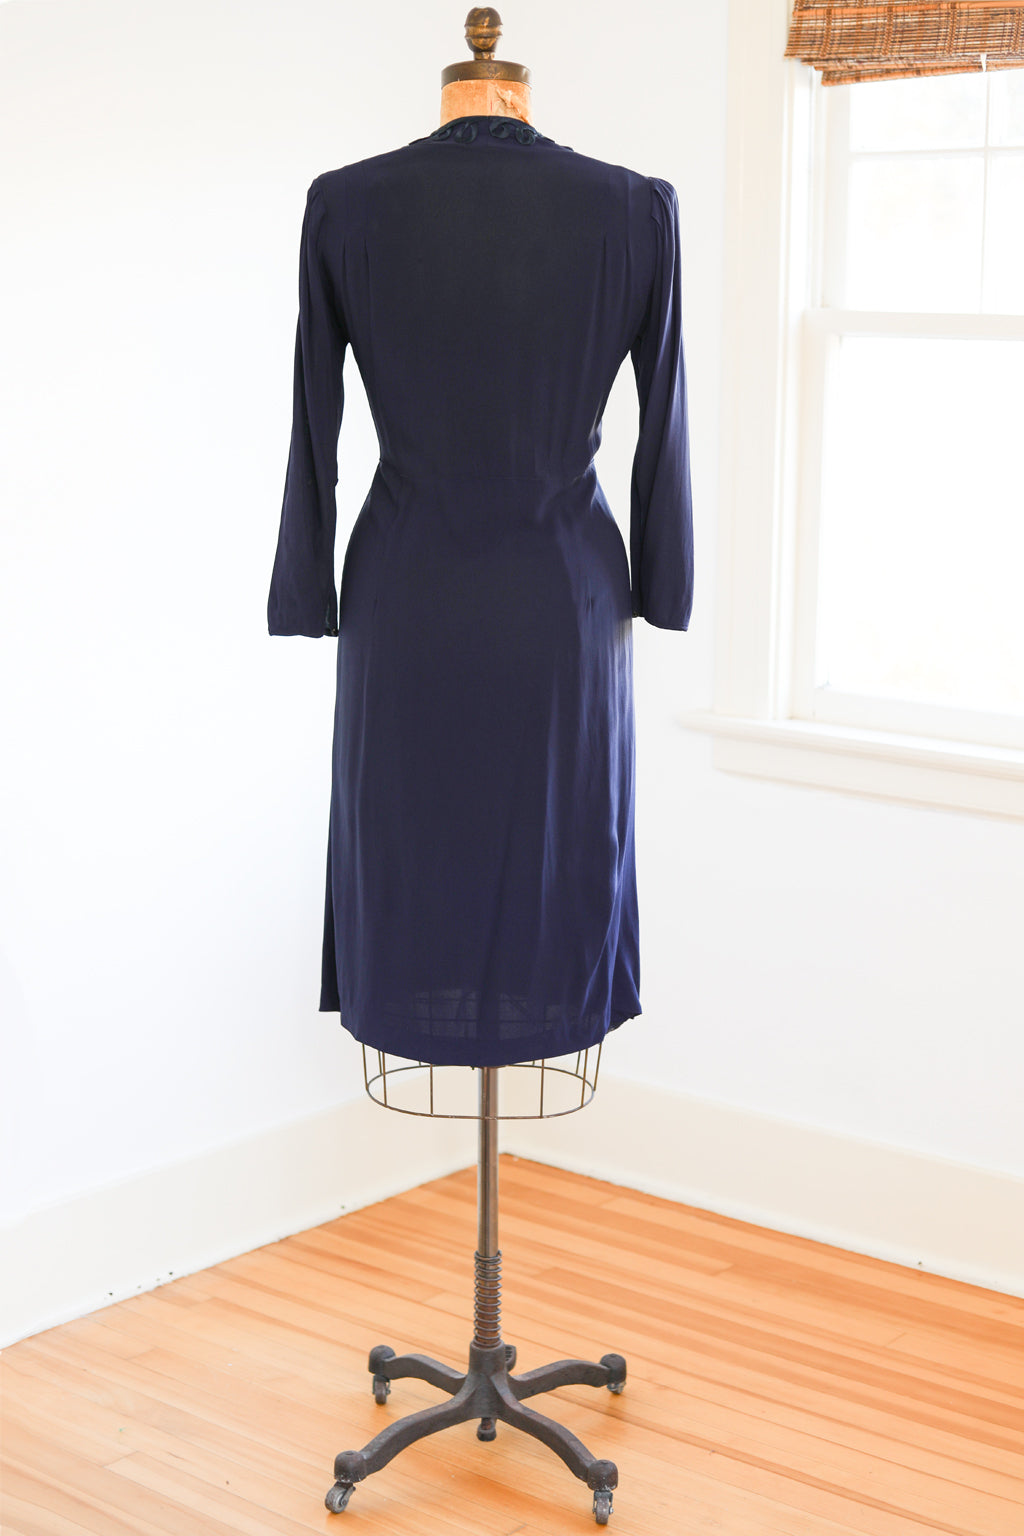 Vintage 1930s Dress - VOLUP Navy Blue Matte Rayon w Satin Soutache Loop-de-Loops Size XL to XXL